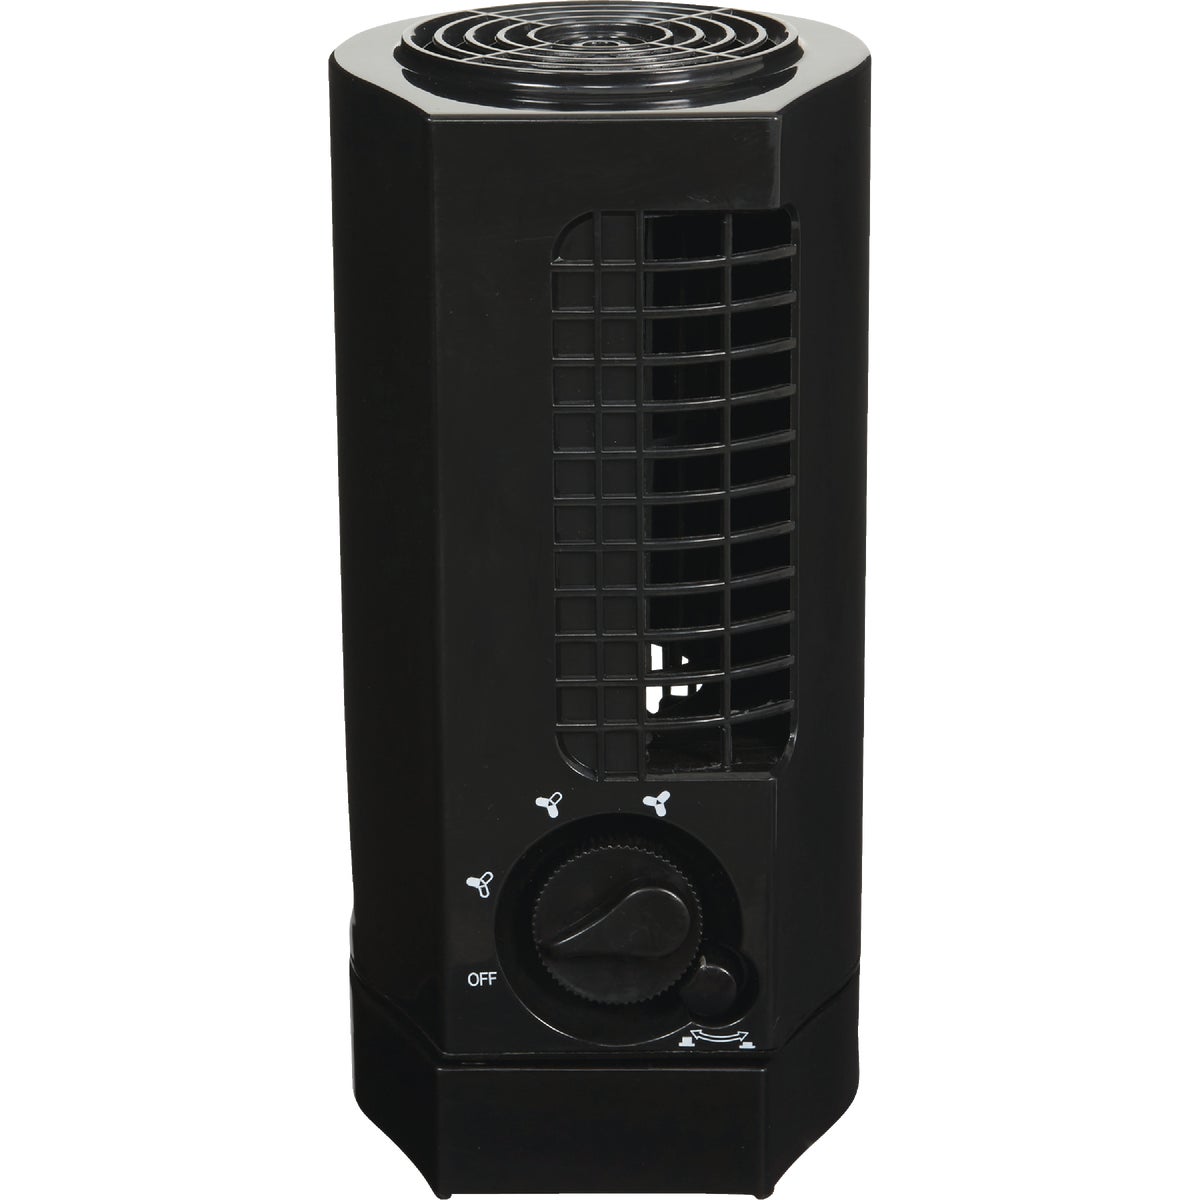 Item 501220, Mini personal tower fan. Ultra slim, provides discreet air circulation.